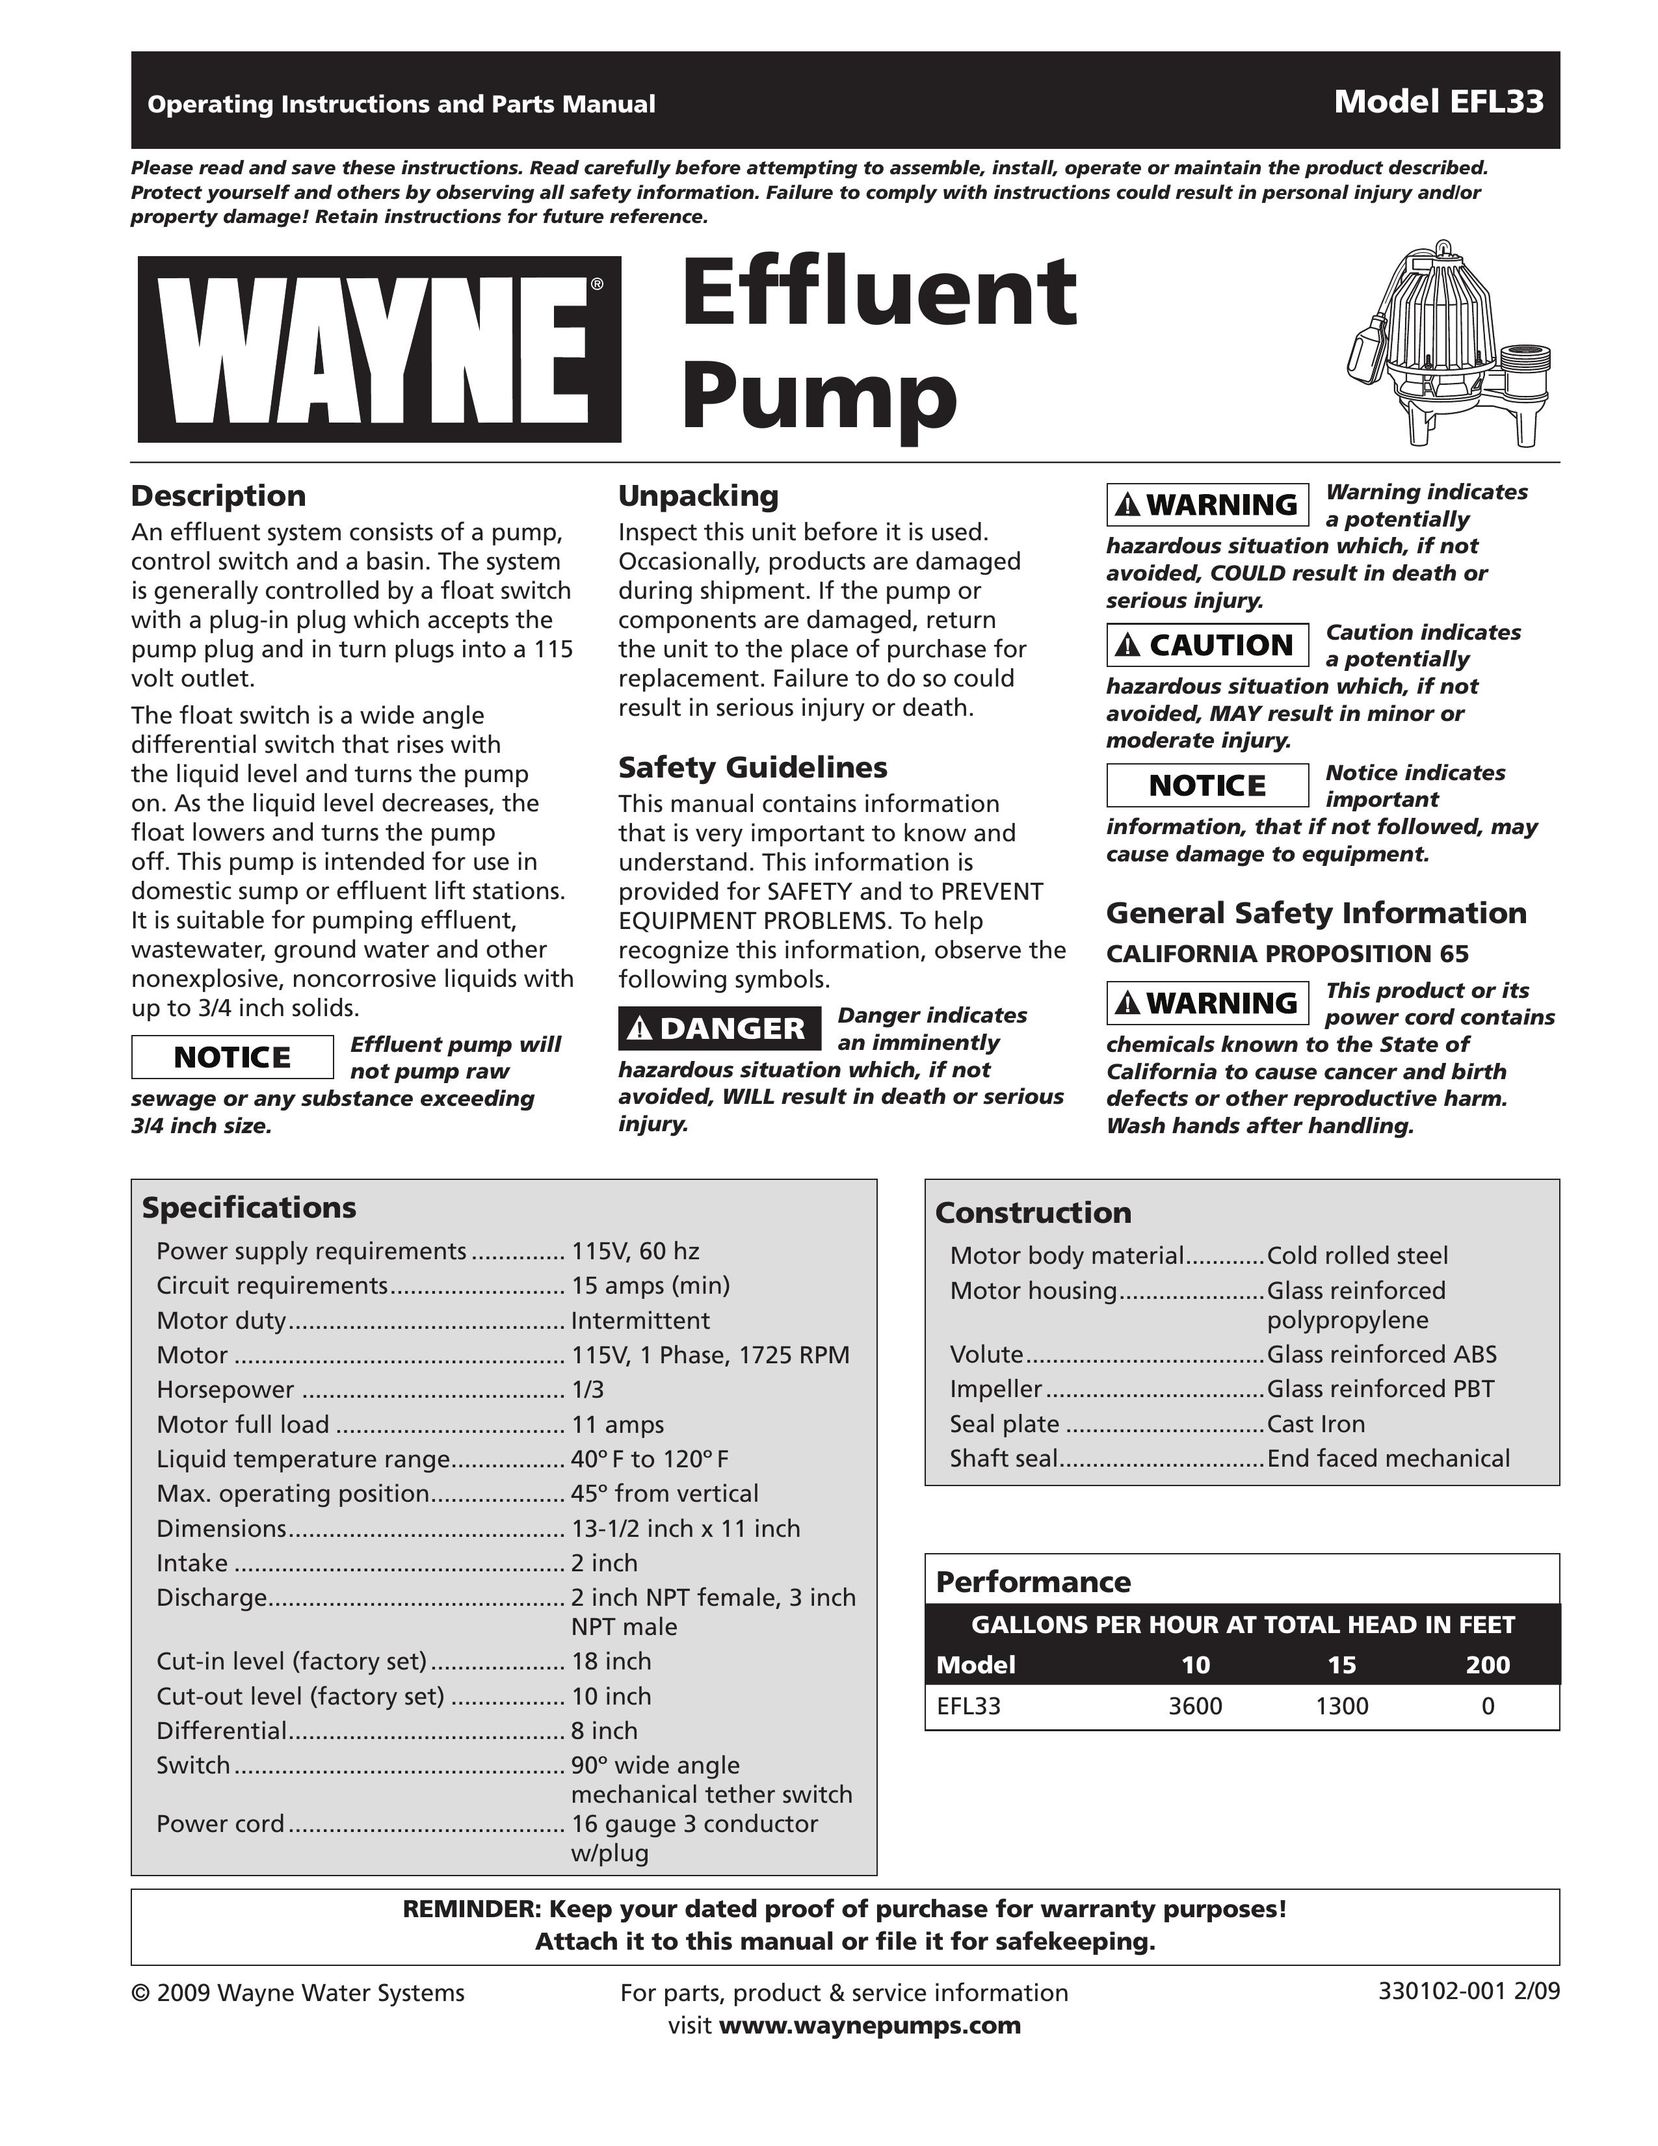 Wayne 330102-001 Septic System User Manual